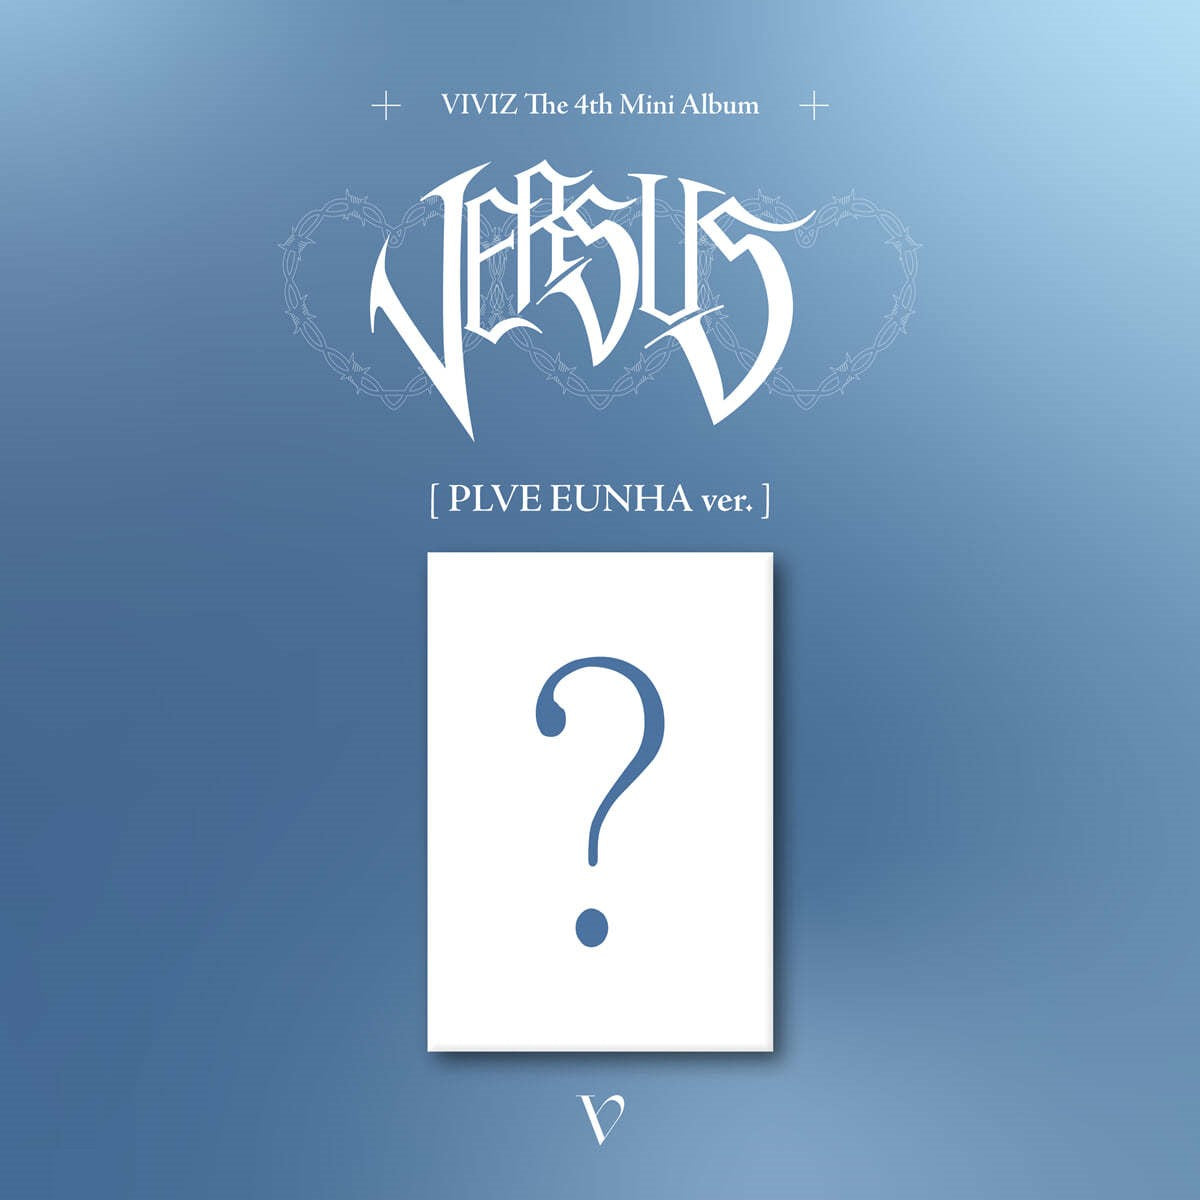 VANNER faz comeback com seu primeiro mini-álbum “VENI VIDI VICI”